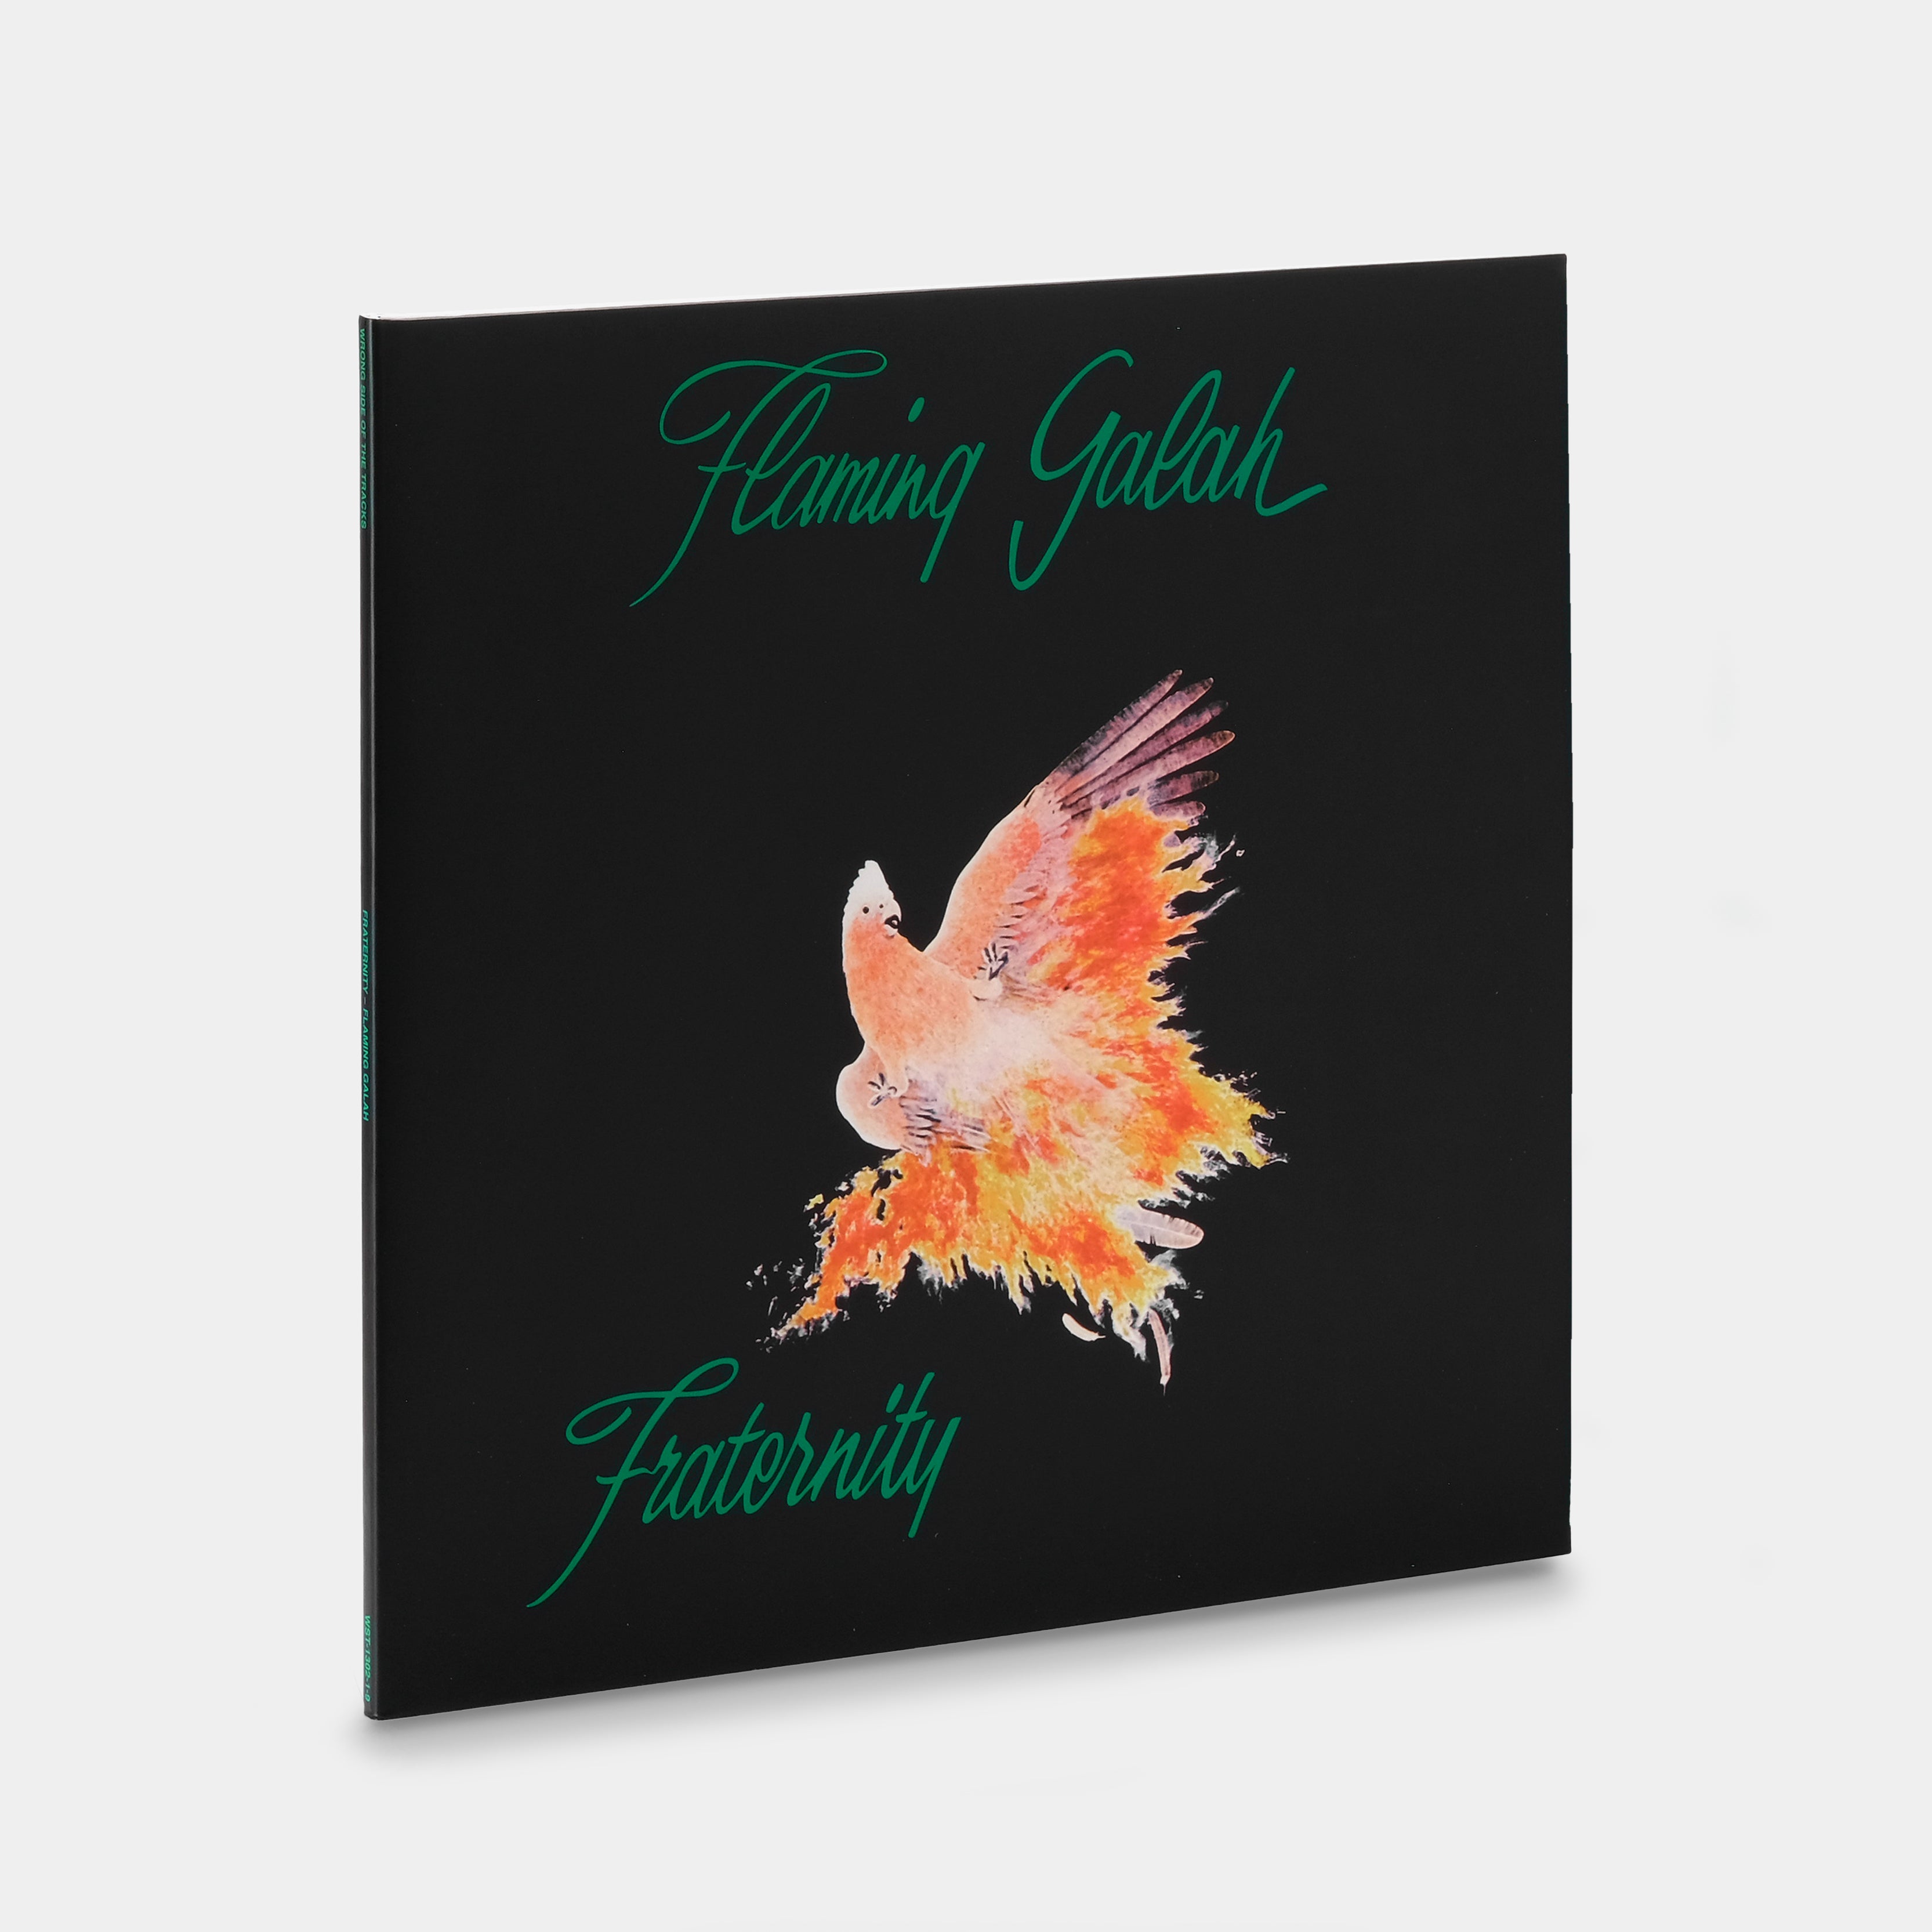 Fraternity - Flaming Galah 2xLP Green Vinyl Record